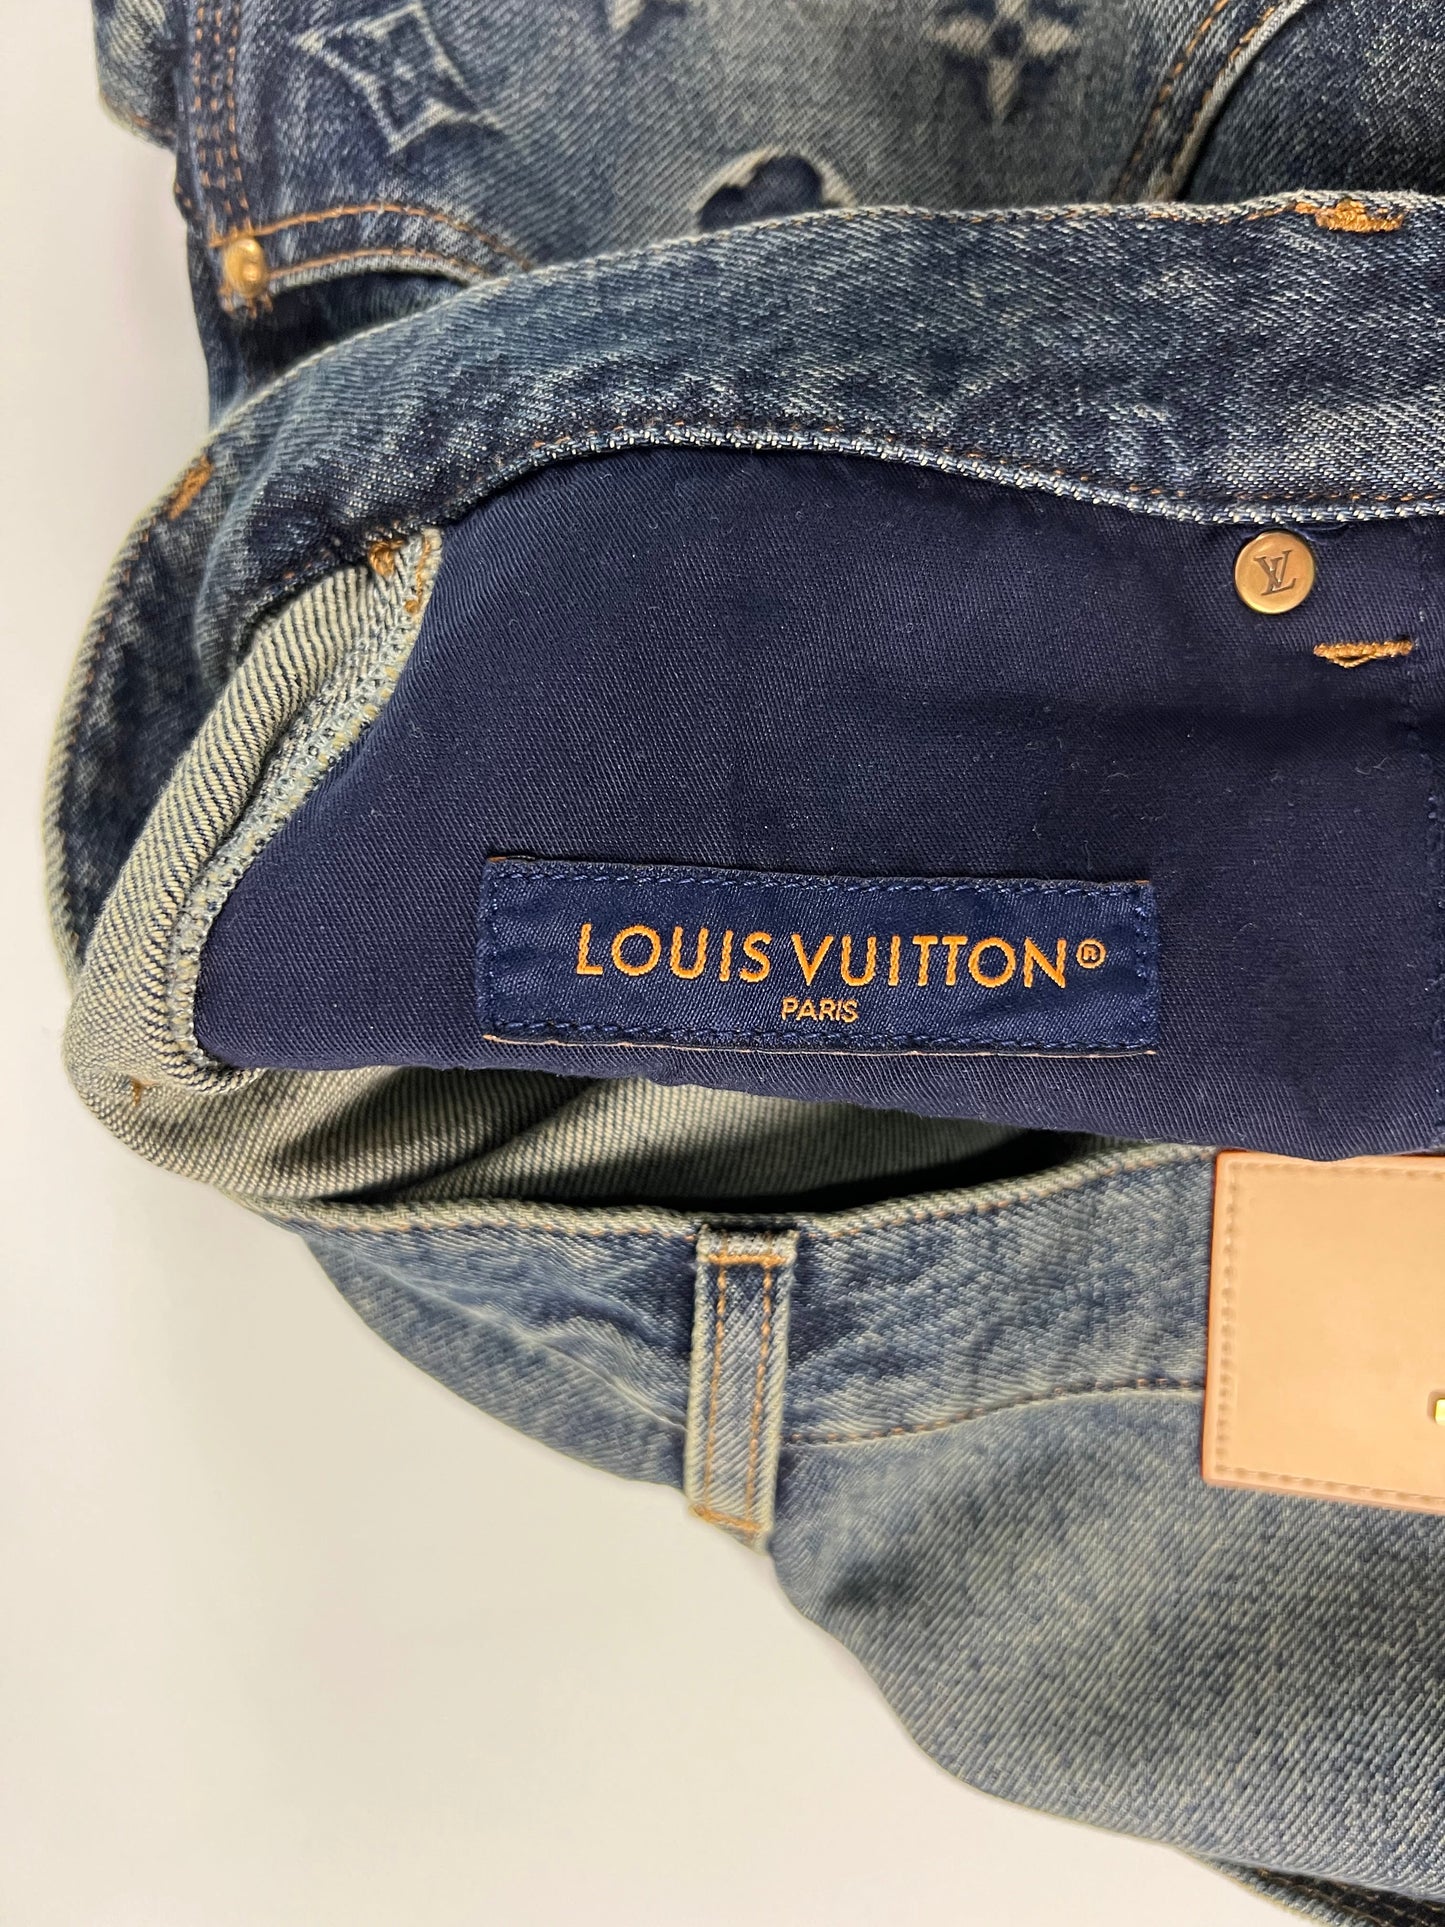 Louis Vuitton AW23 denim carpenter pants in indigo blue SZ:W31